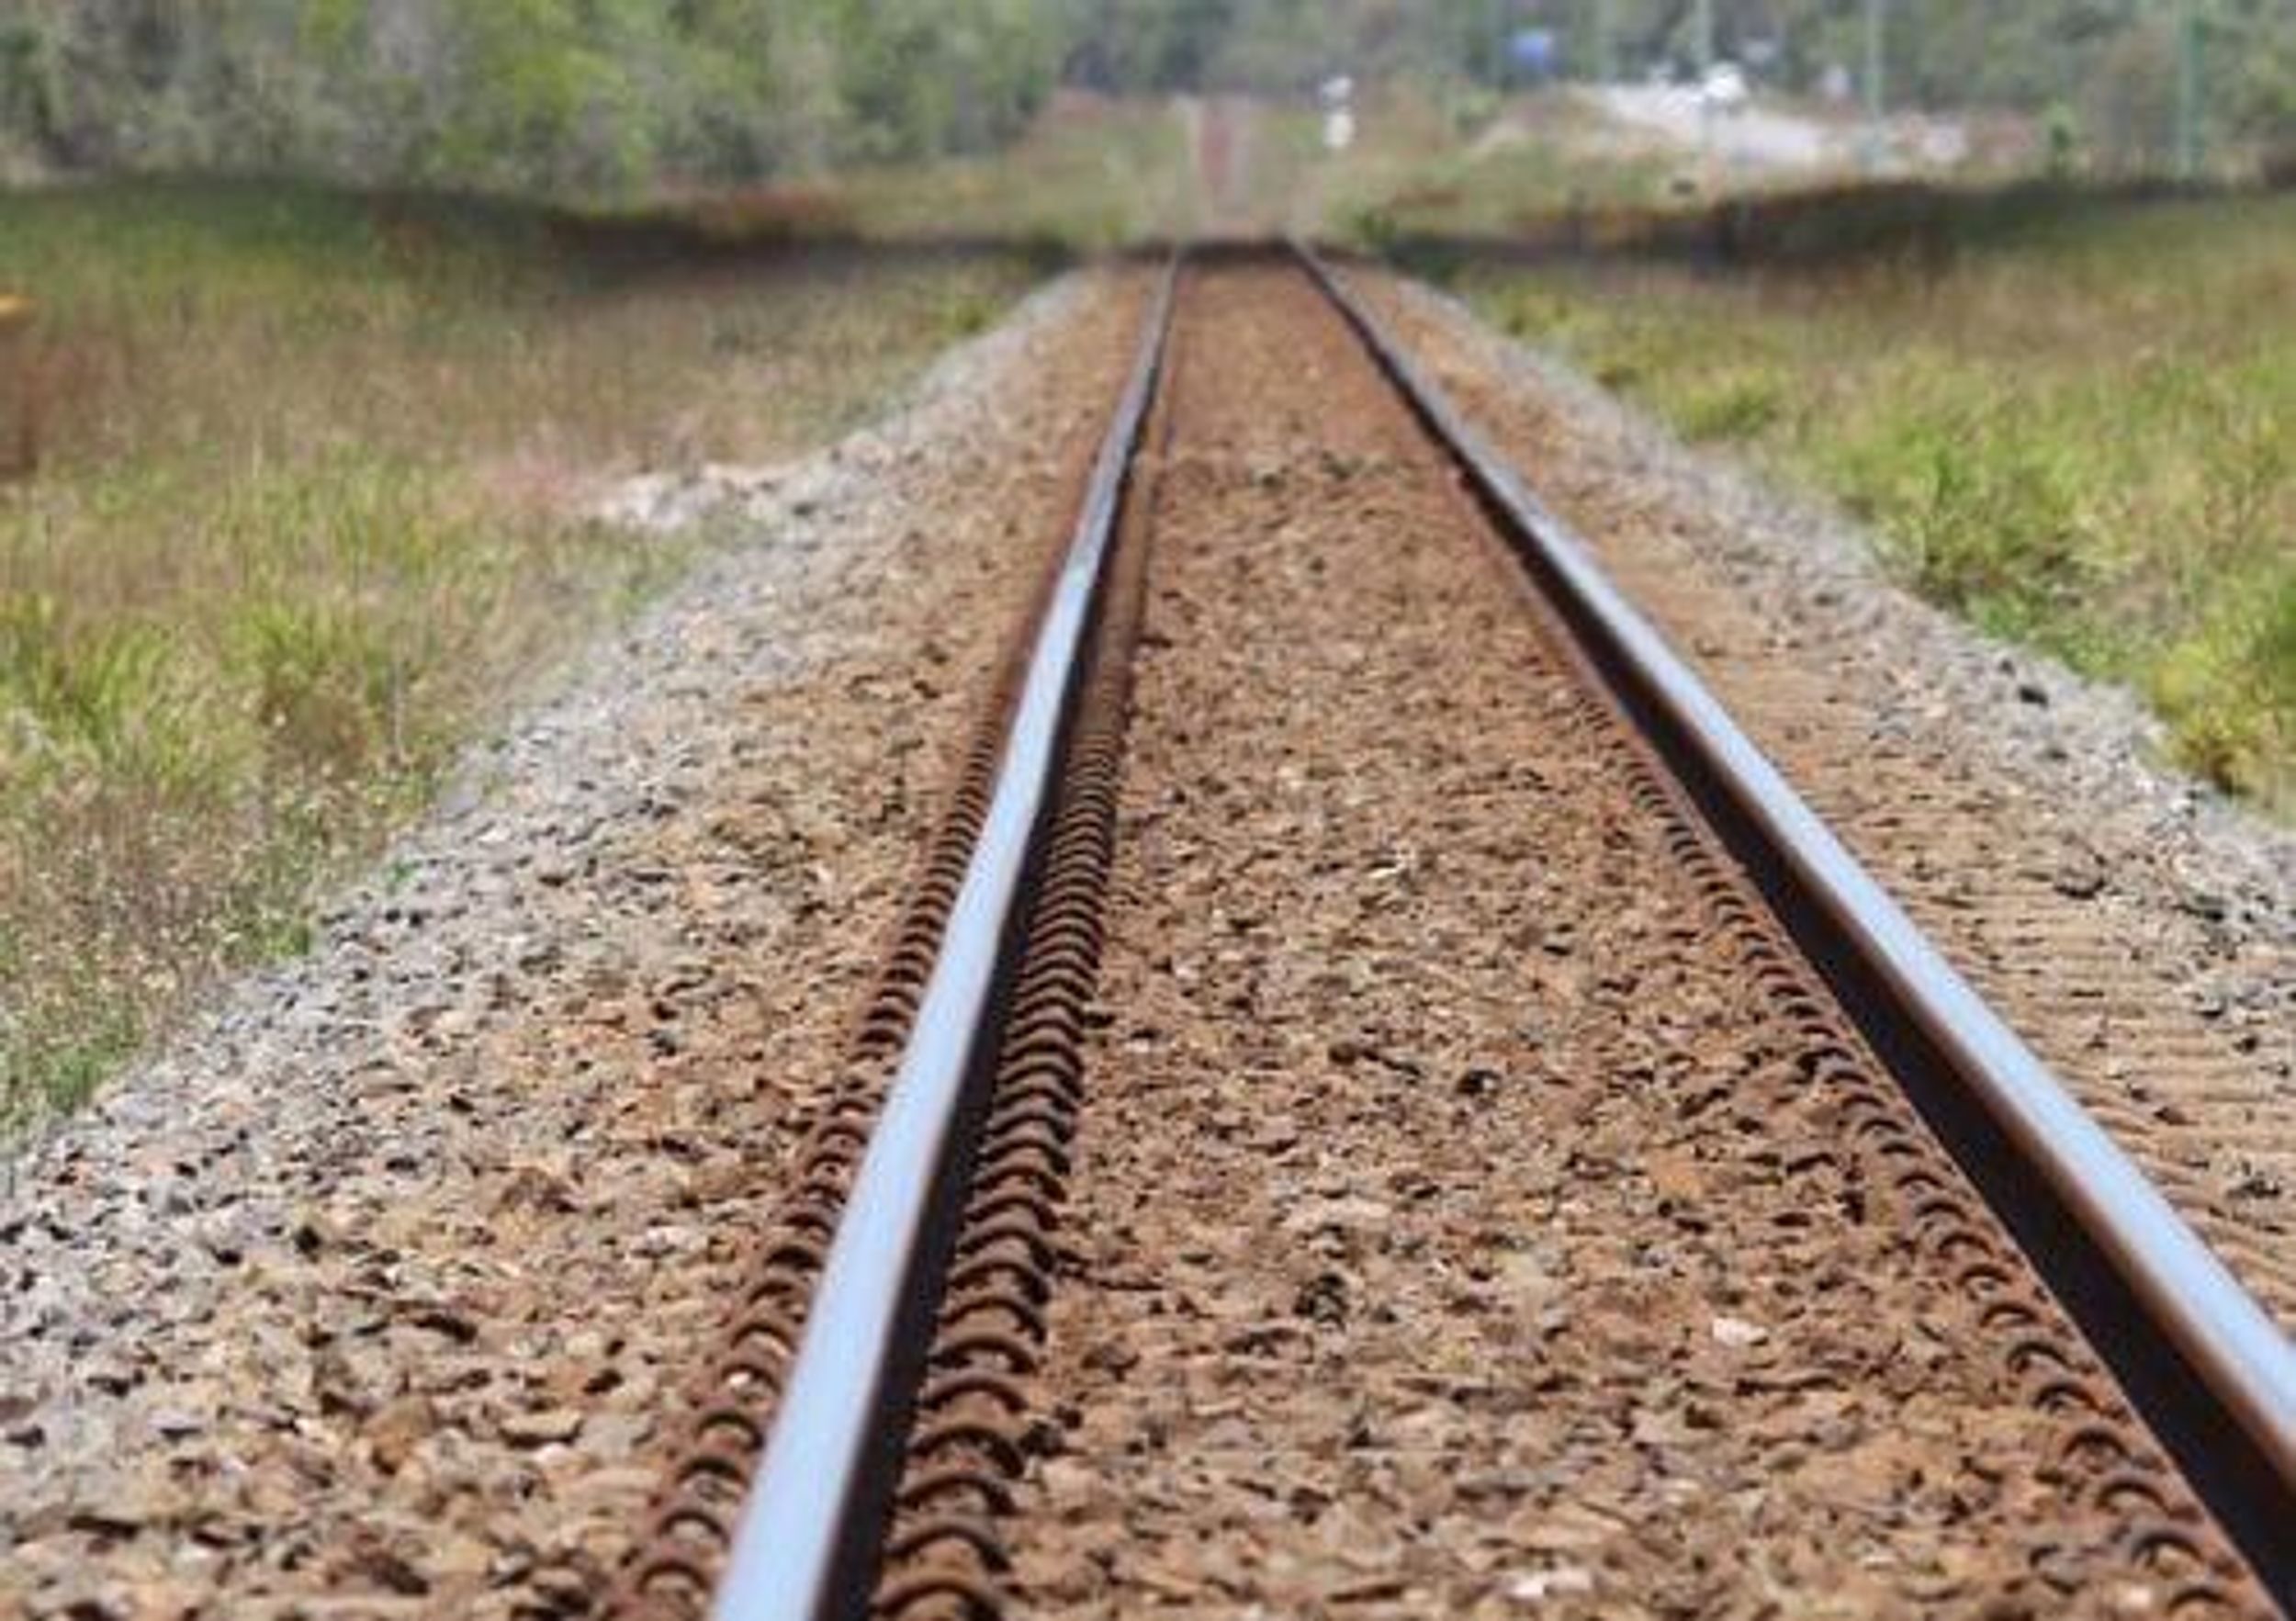 BHP on Track to Meet Iron Ore Guidance Despite Derailed Train